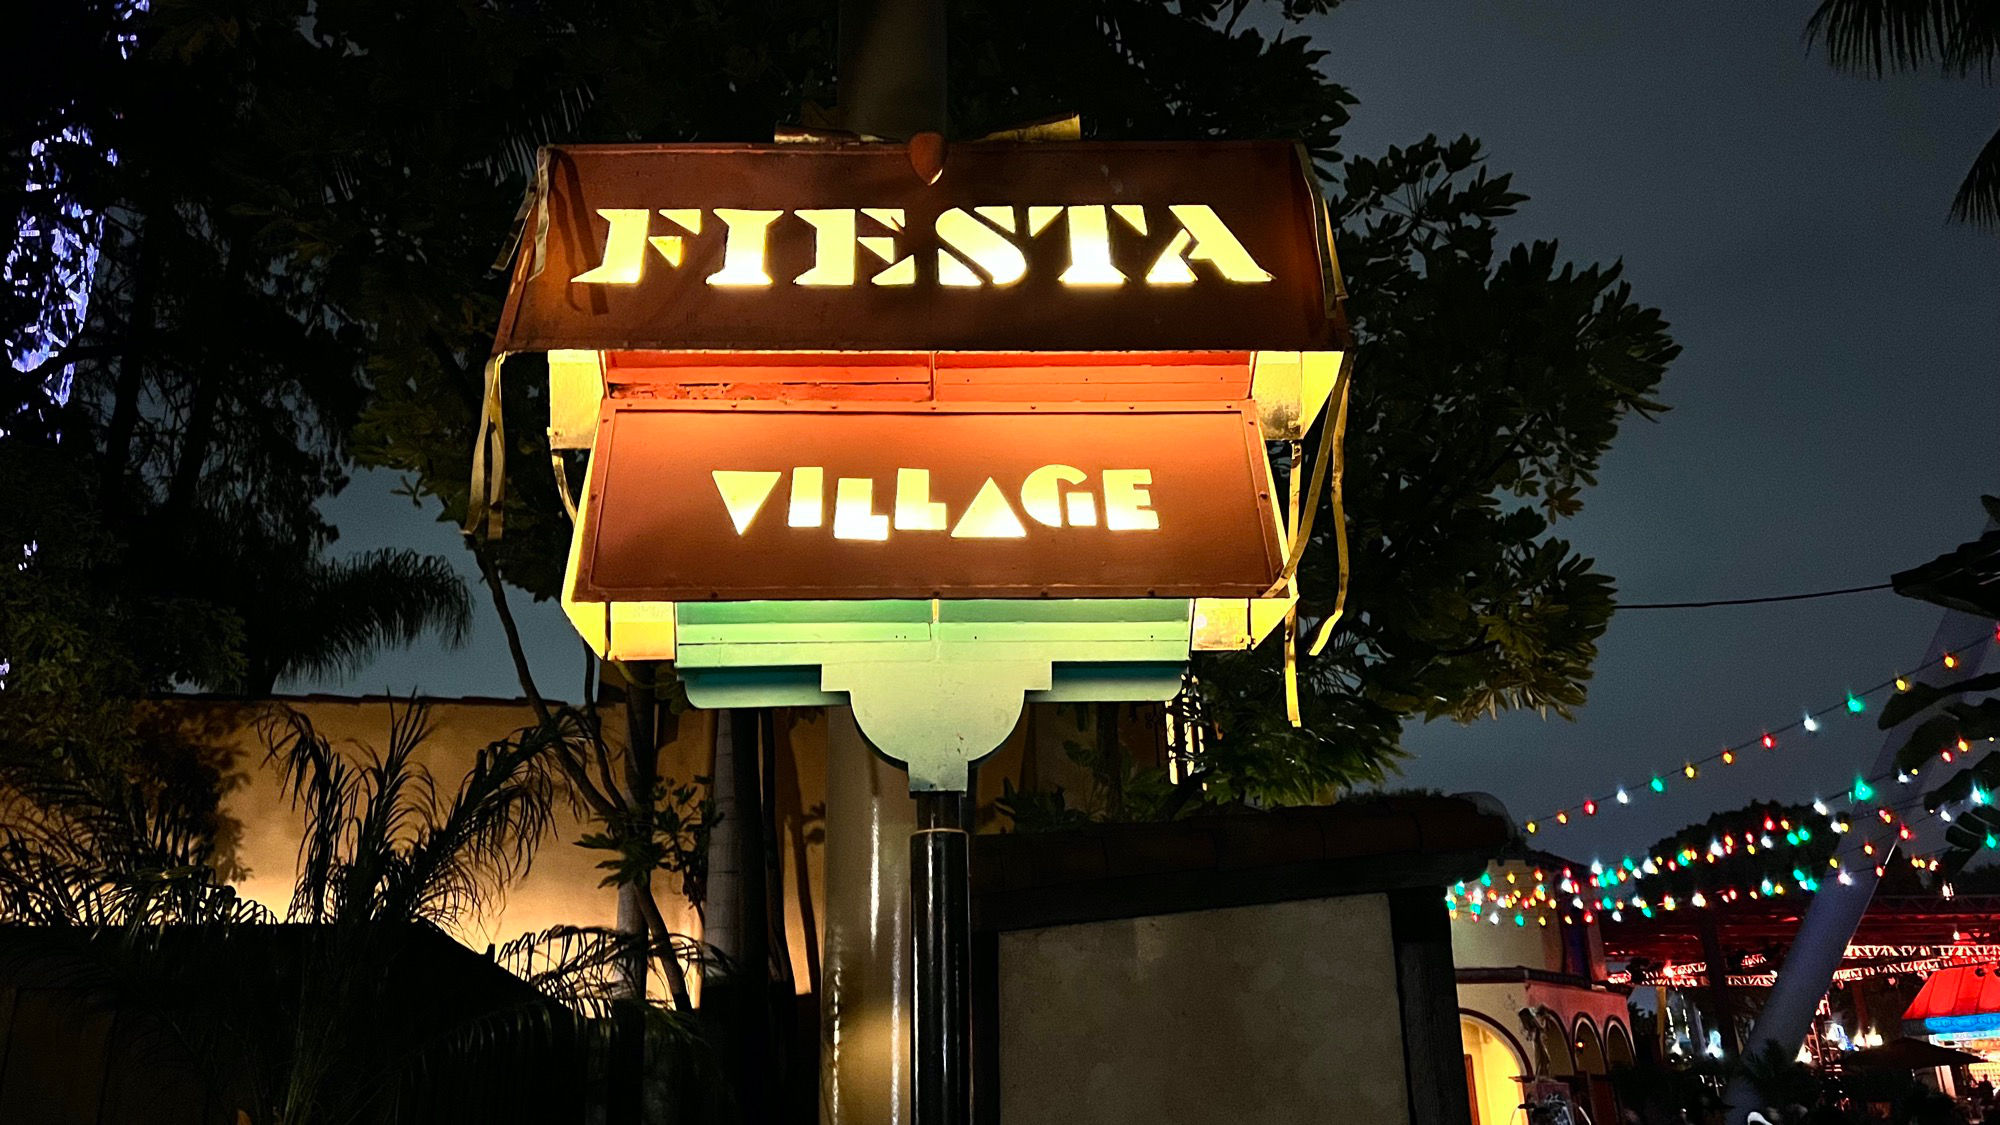 Knott's Berry Farm Fiesta Village Sign at Night